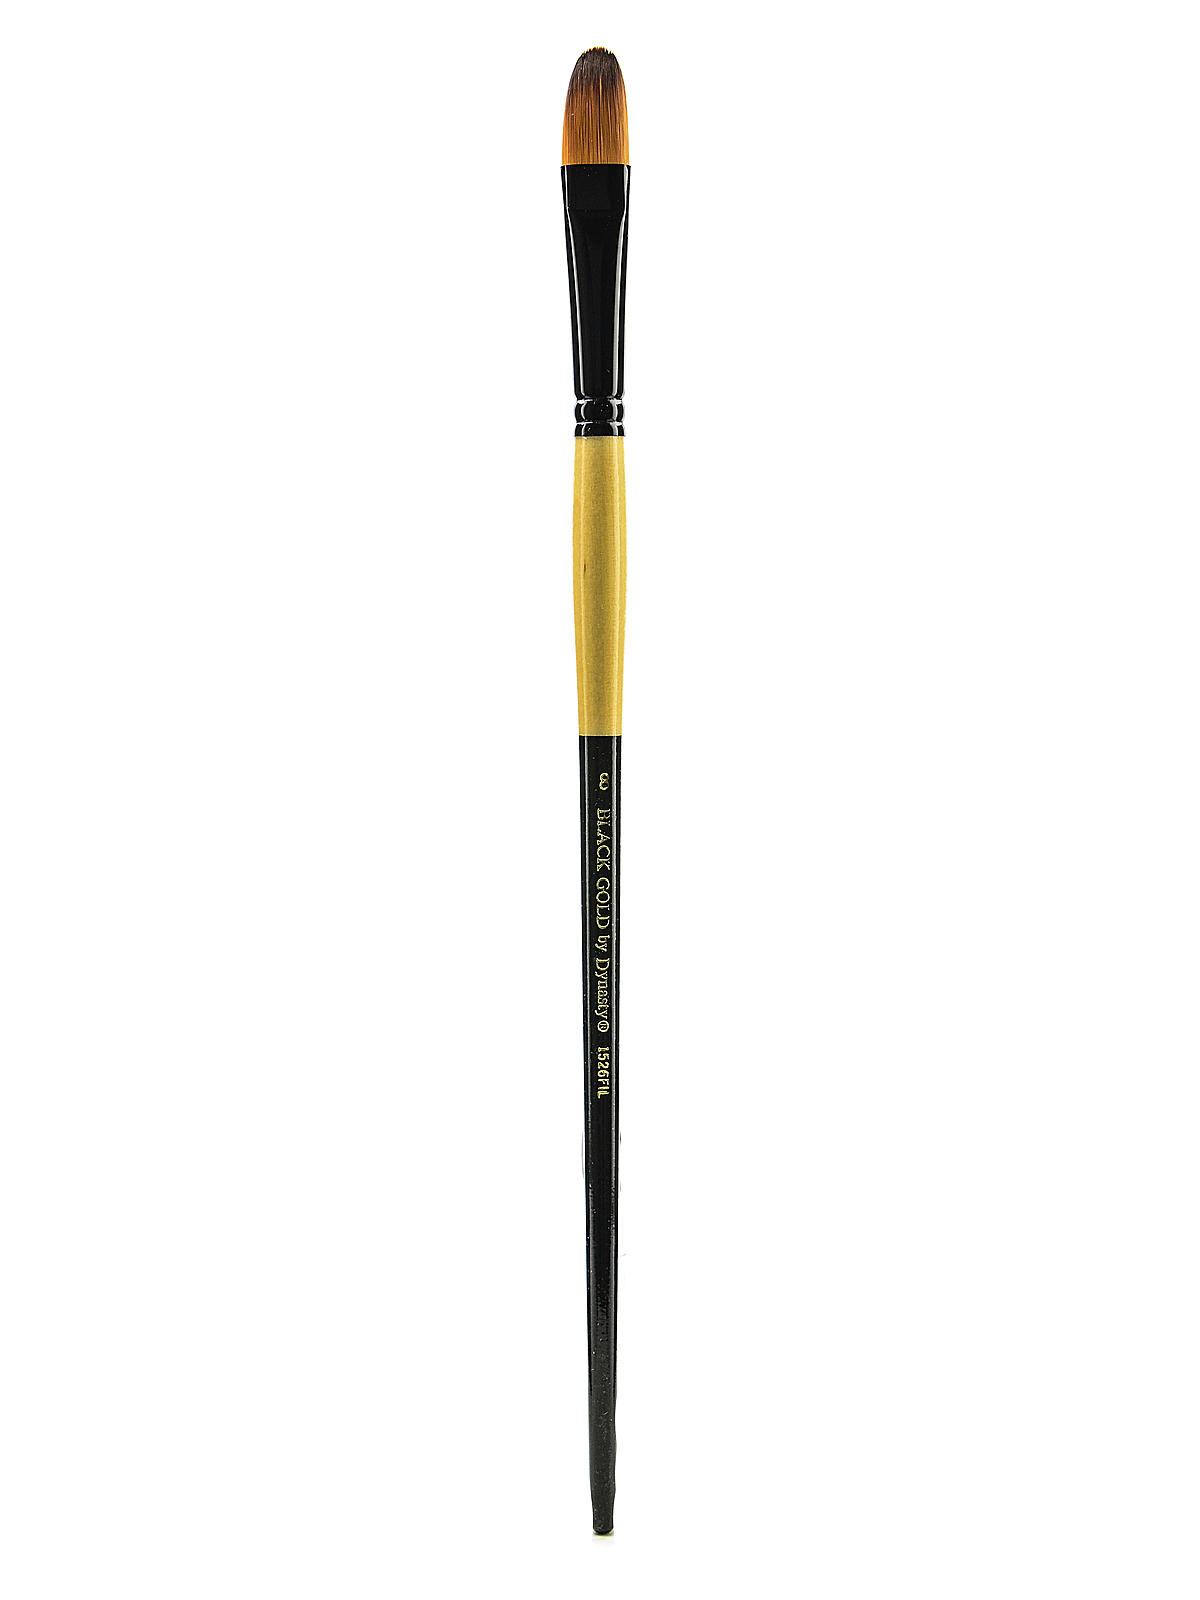 Black Gold Series Long Handled Synthetic Brushes 8 Filbert 1526FIL